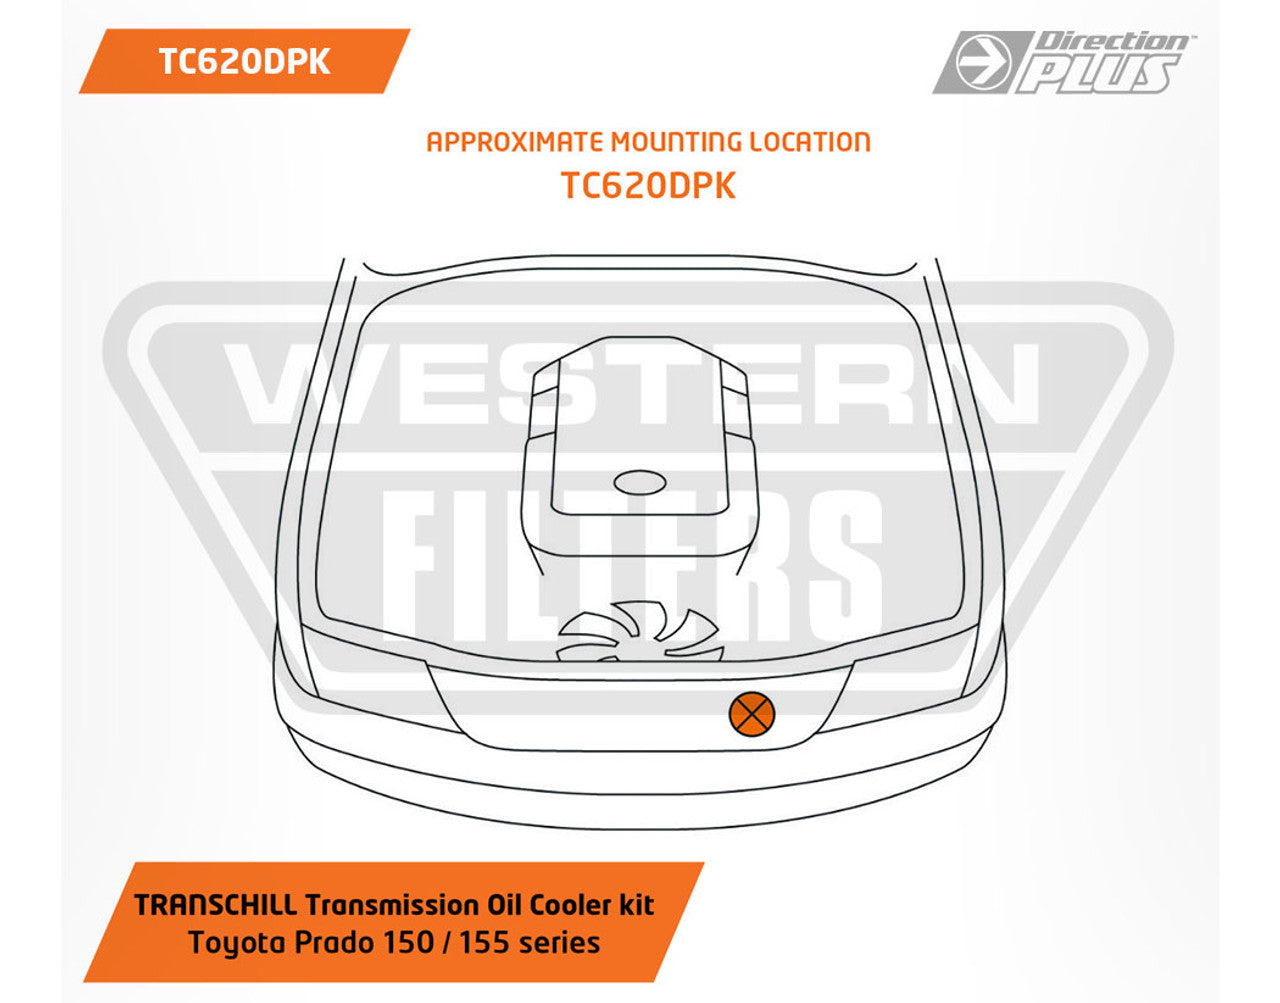 TC620DPK Transmission Cooler Kit for Toyota LC Prado 2015-21 150 155 1GD-FTV 2009-15 150 1KD-FTV